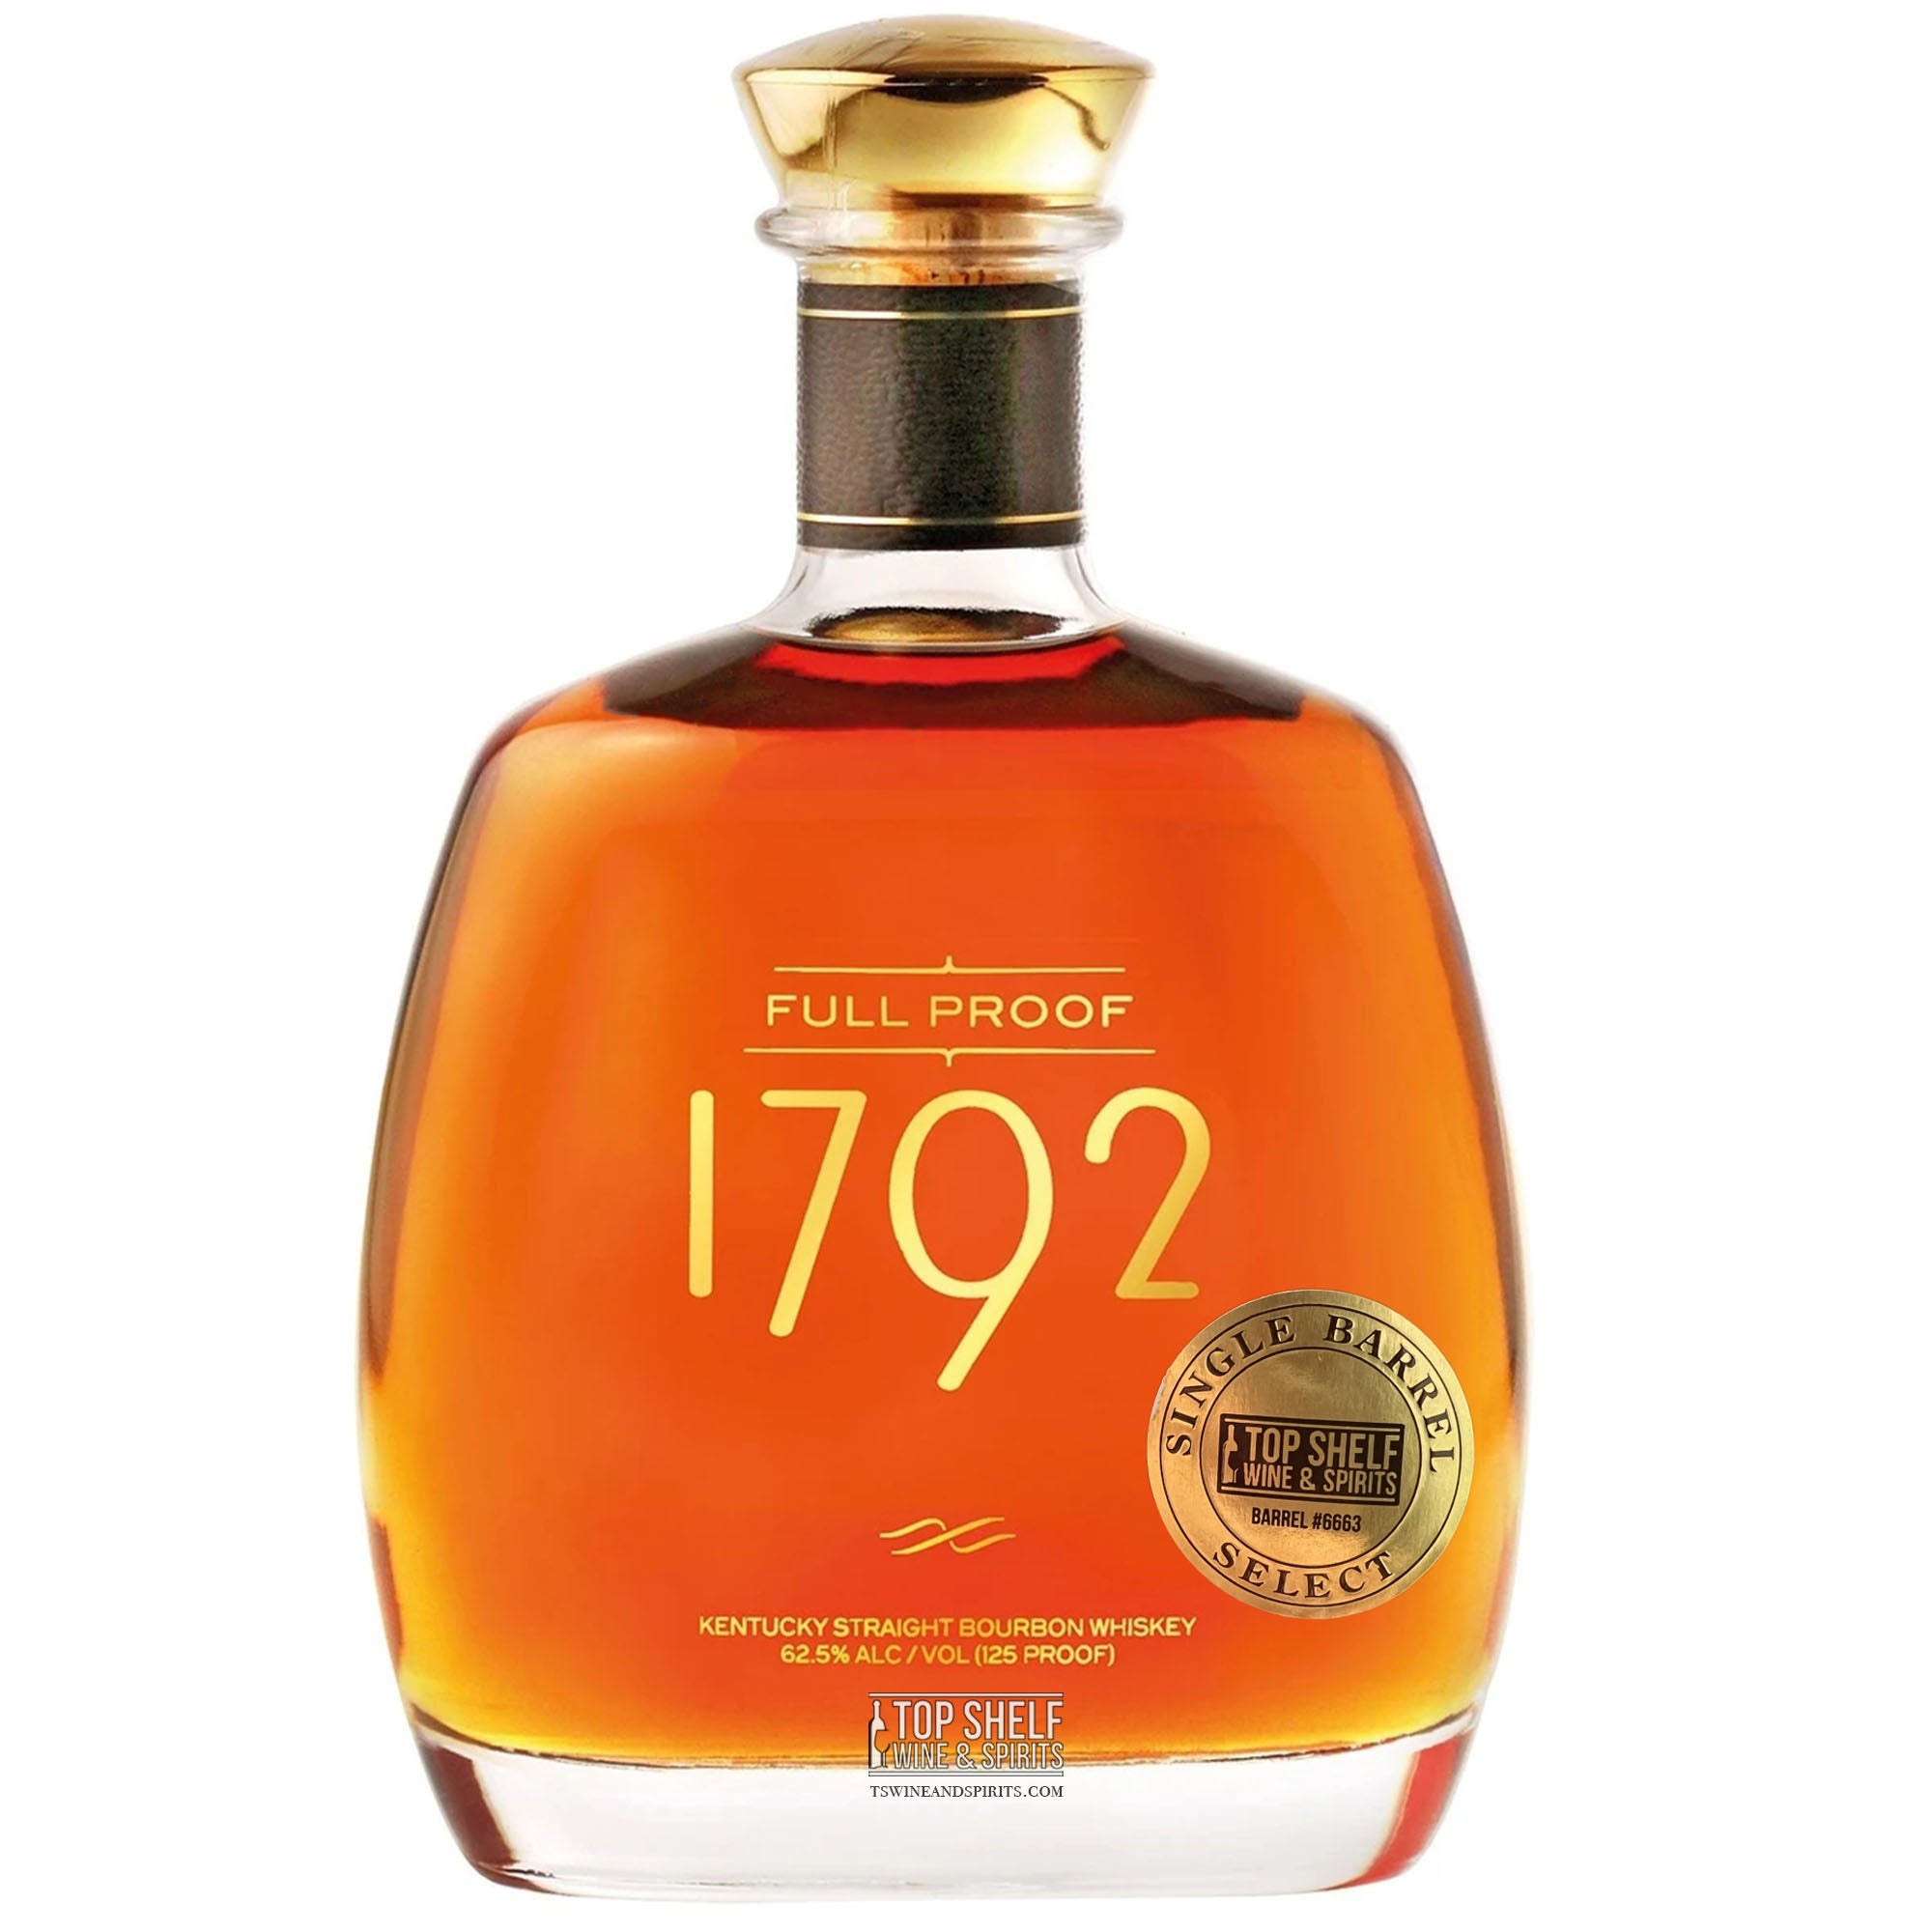 1792 Top Shelf Full Proof Single Barrel Select Bourbon (Private Selection)